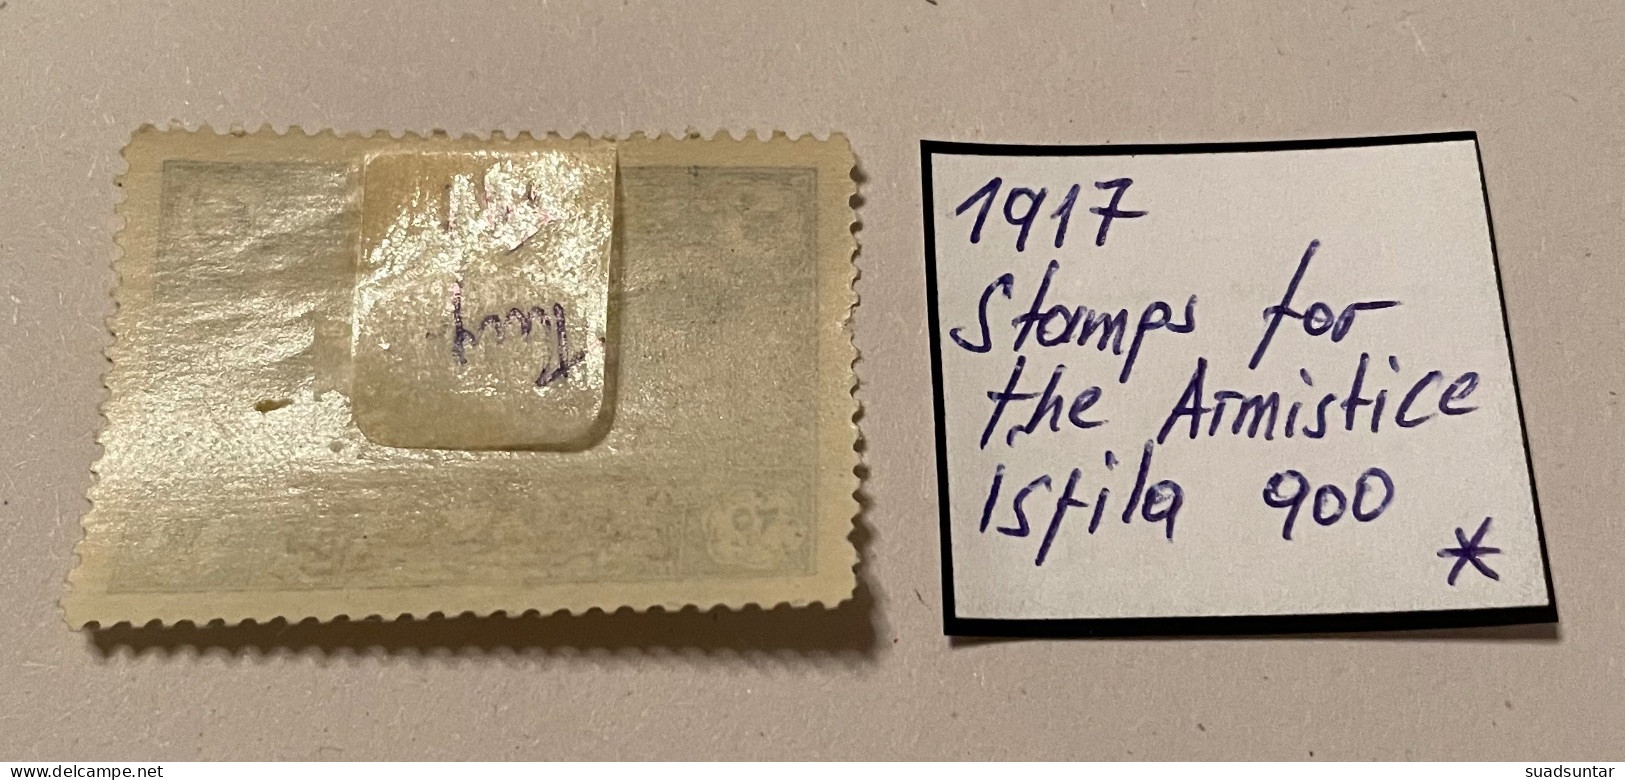 1919 Stamps For The Armistice MH Isfila 900 - Nuovi